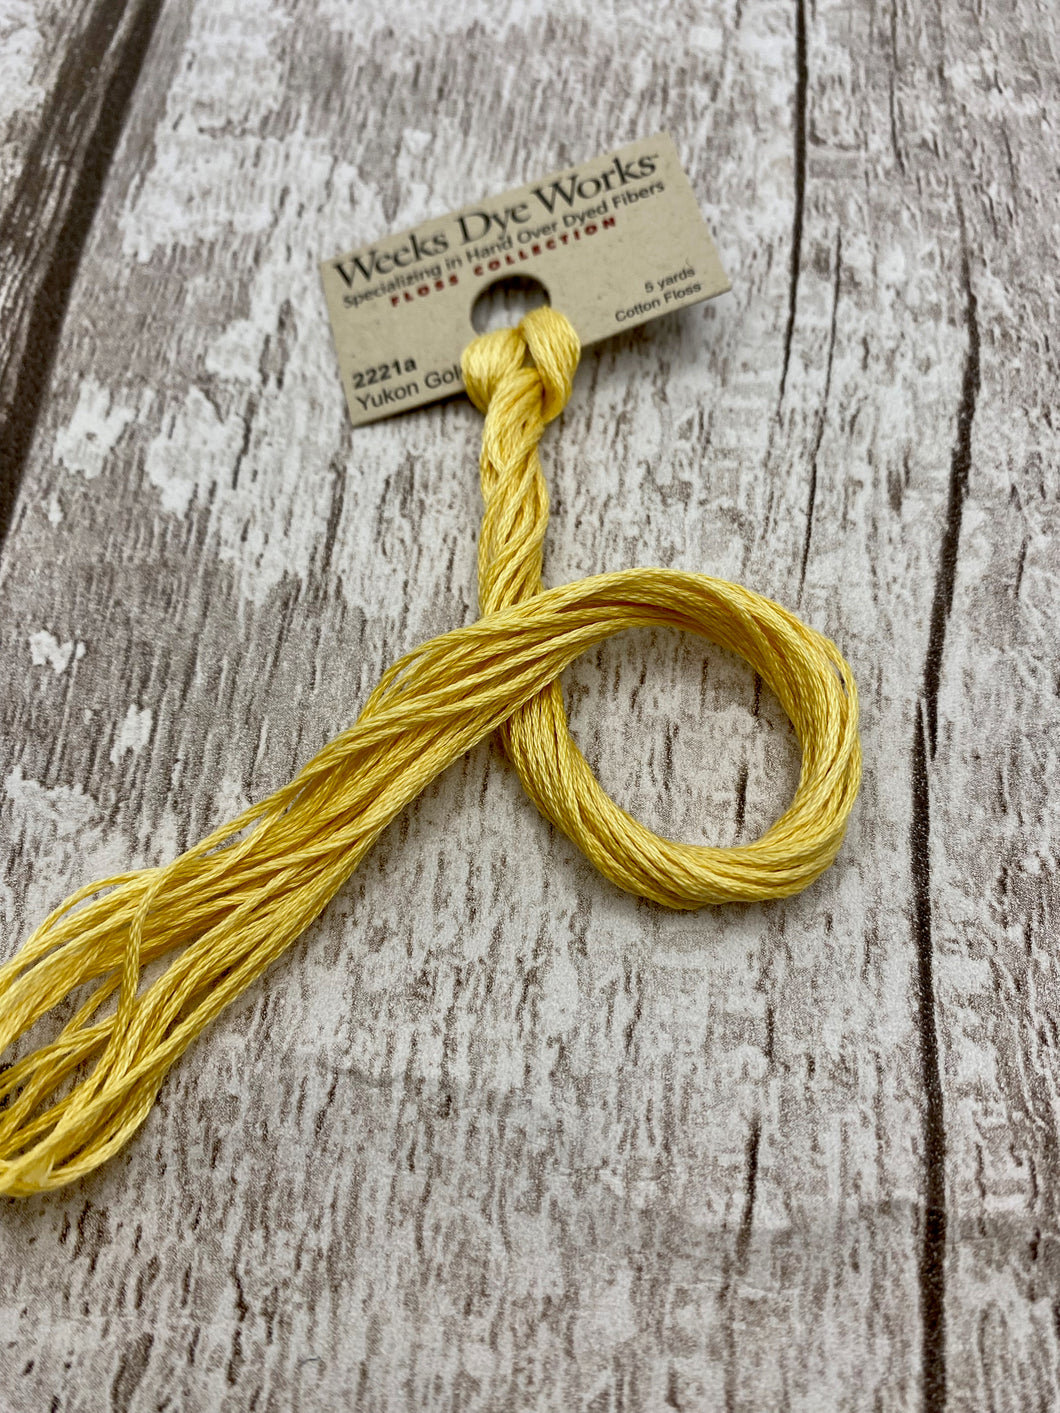 Yukon Gold (#2221a) Weeks Dye Works, 6-strand cotton floss